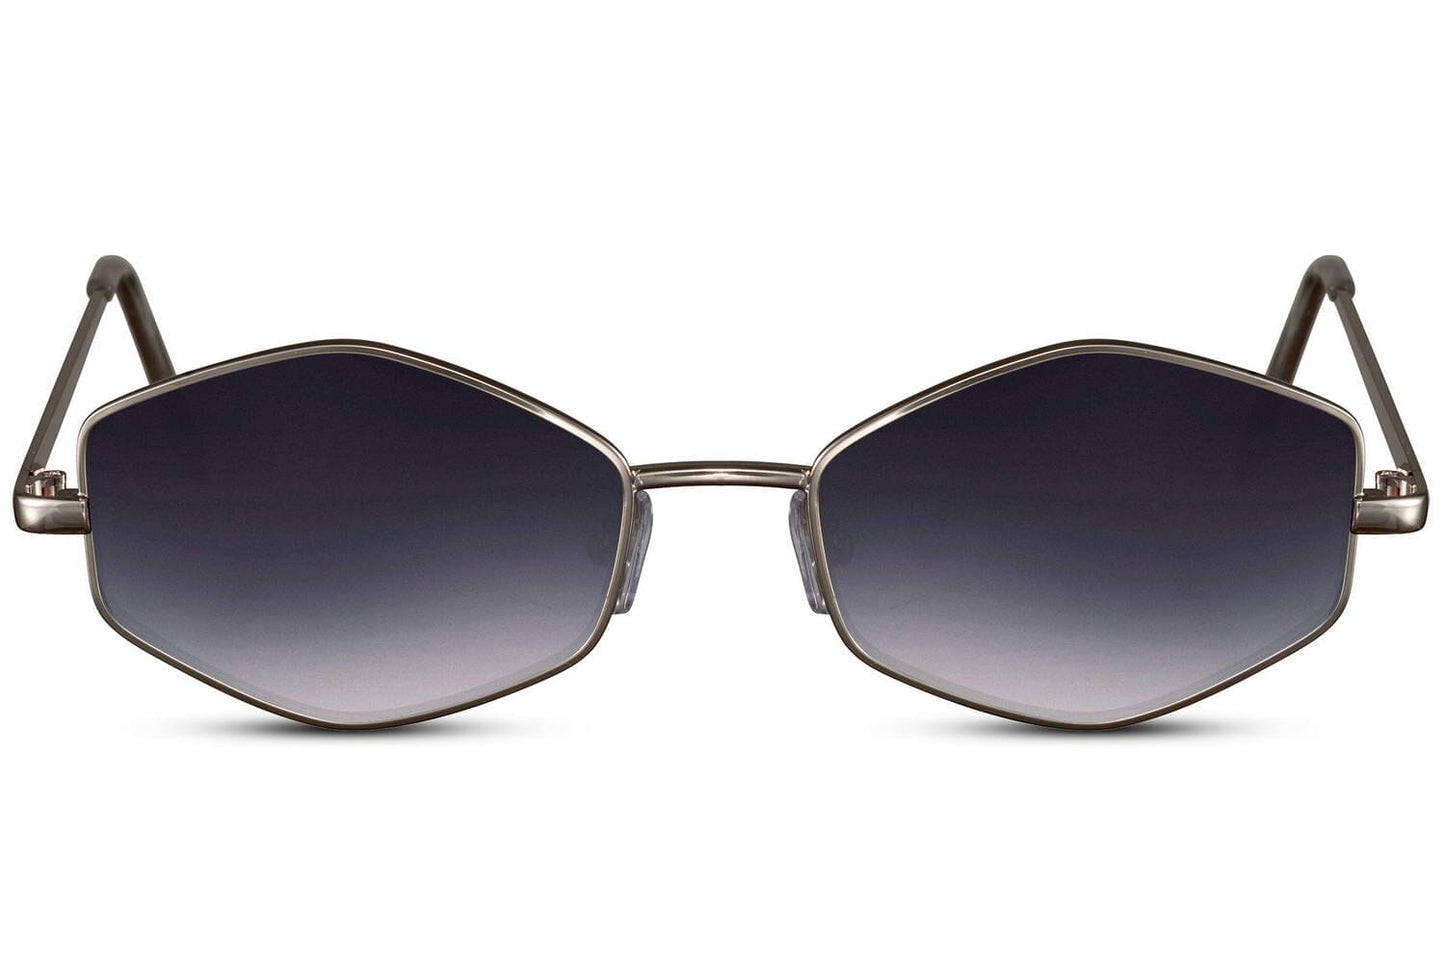 Hexagonal sunglasses unisex. Dark frames. Metal.